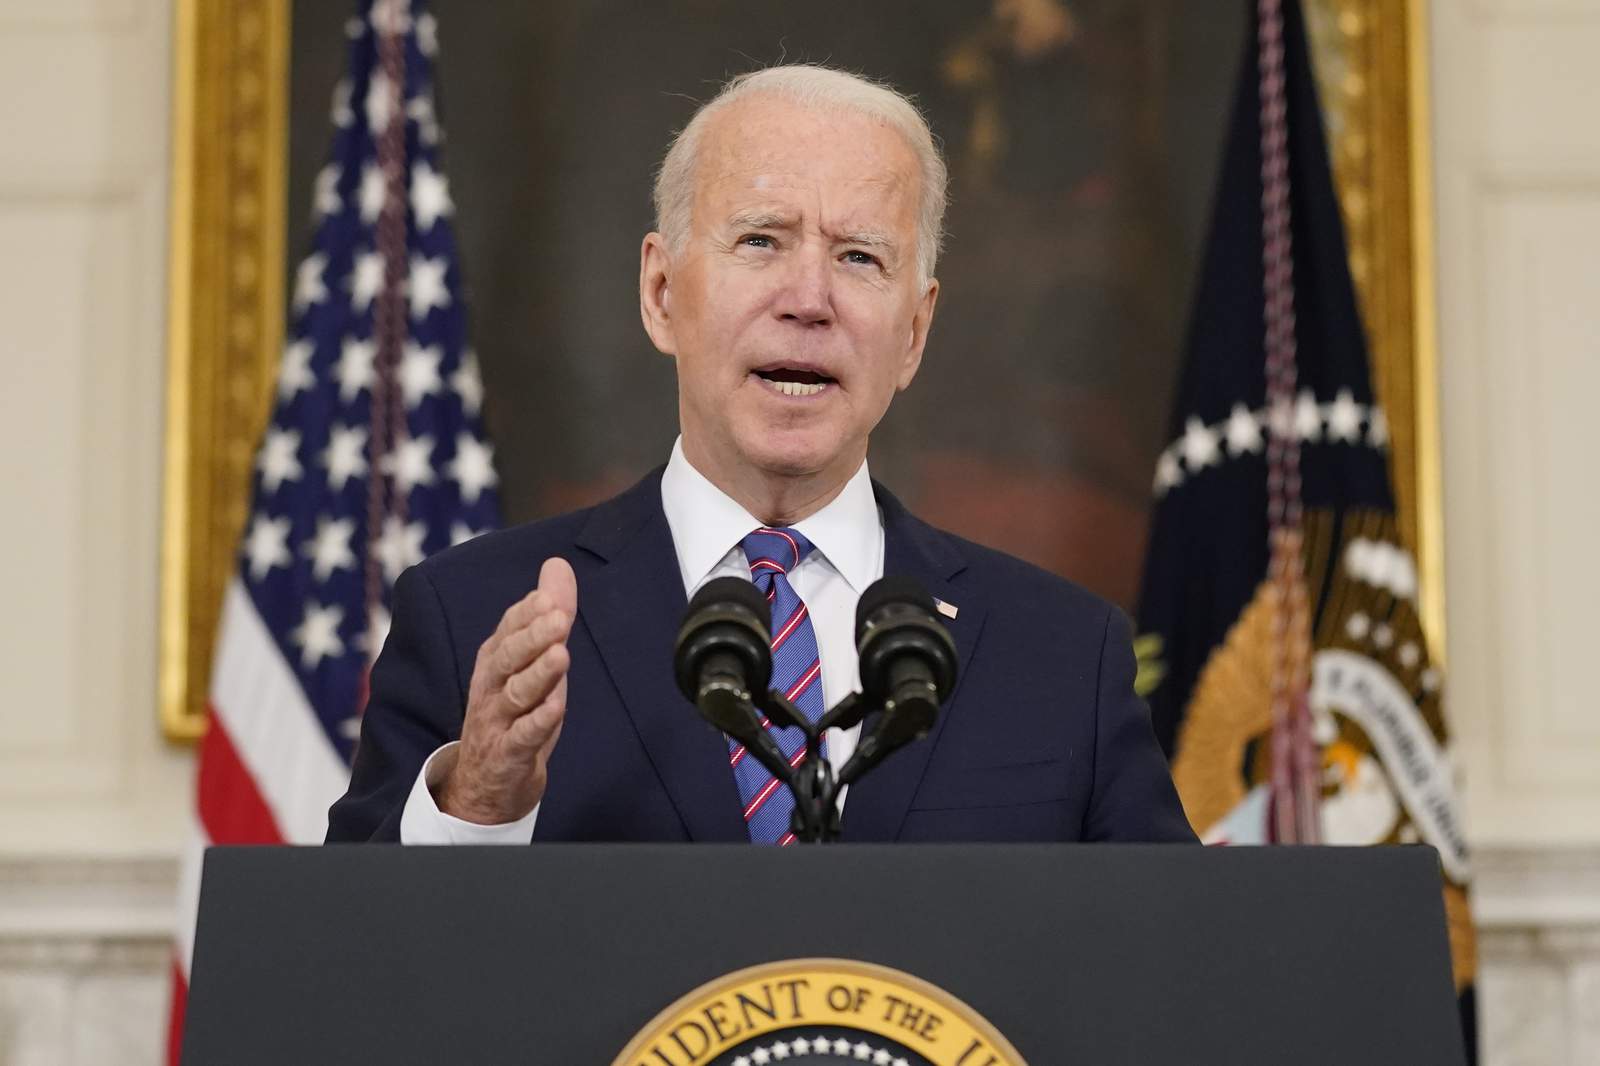 In video, Biden thanks new US citizens for 'choosing us'